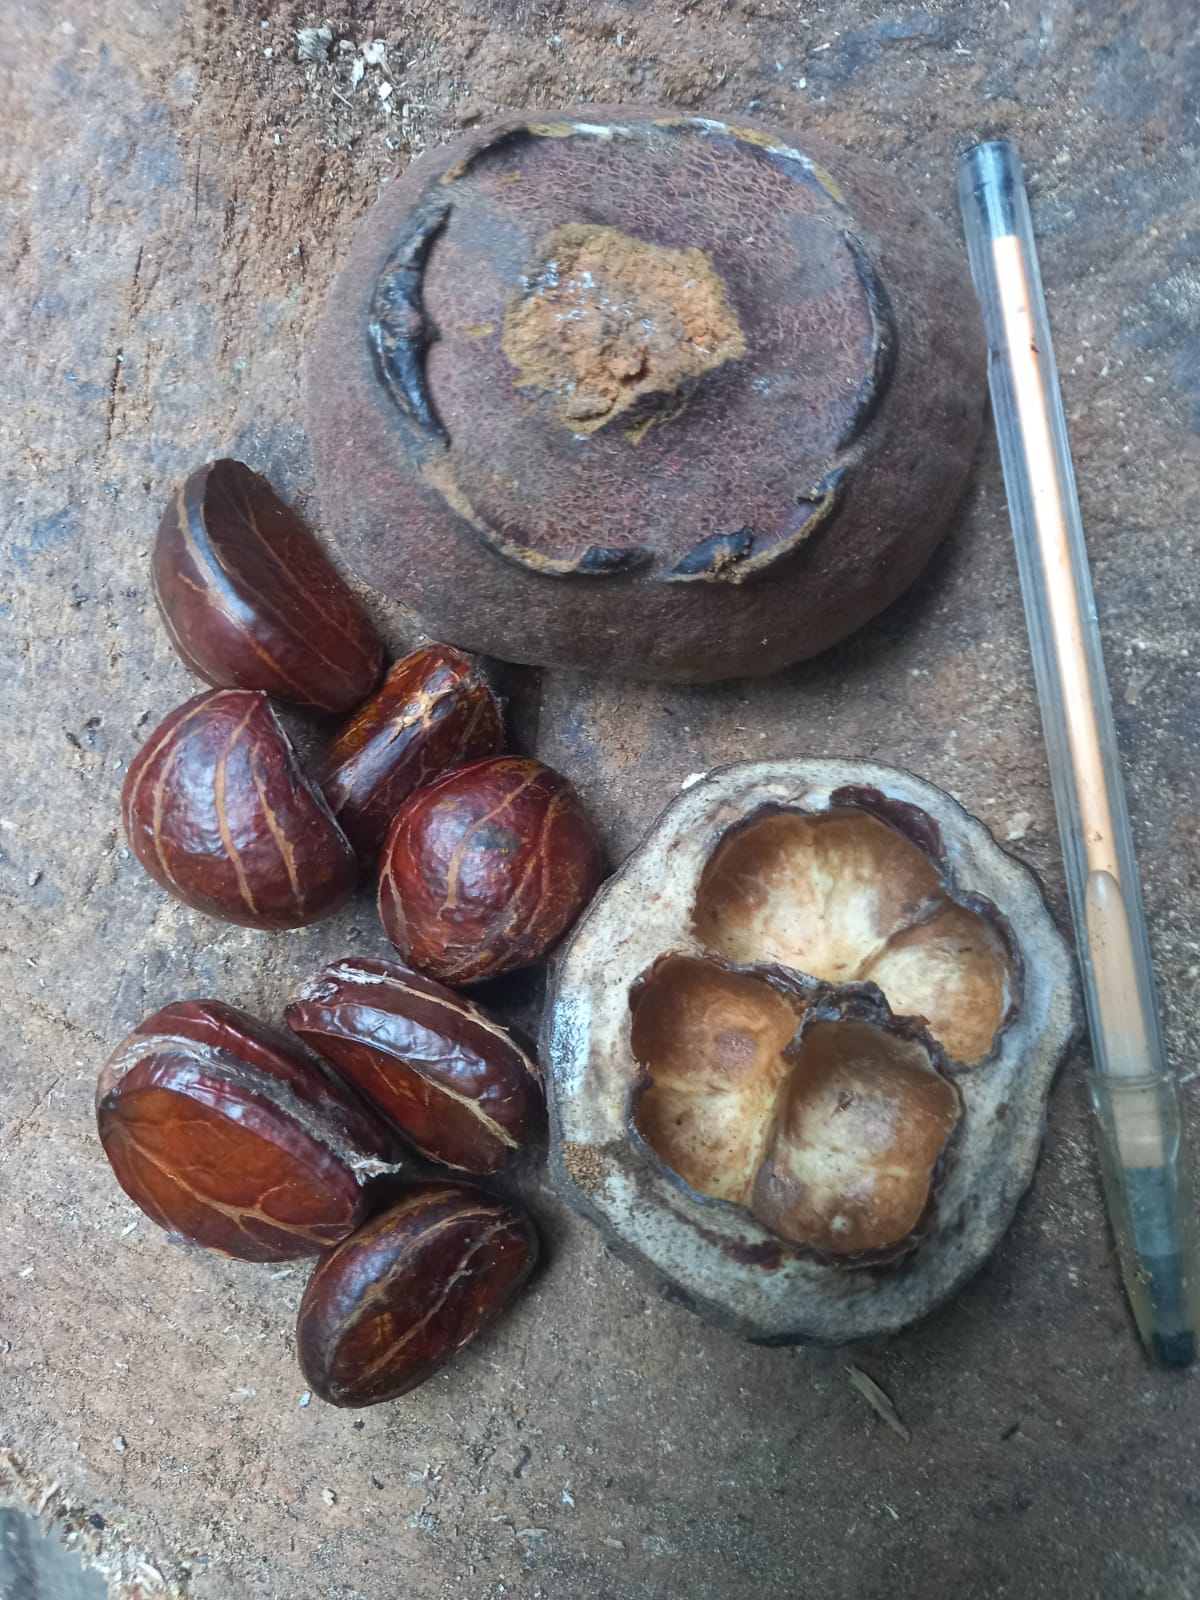 Gustavia sp. Seeds